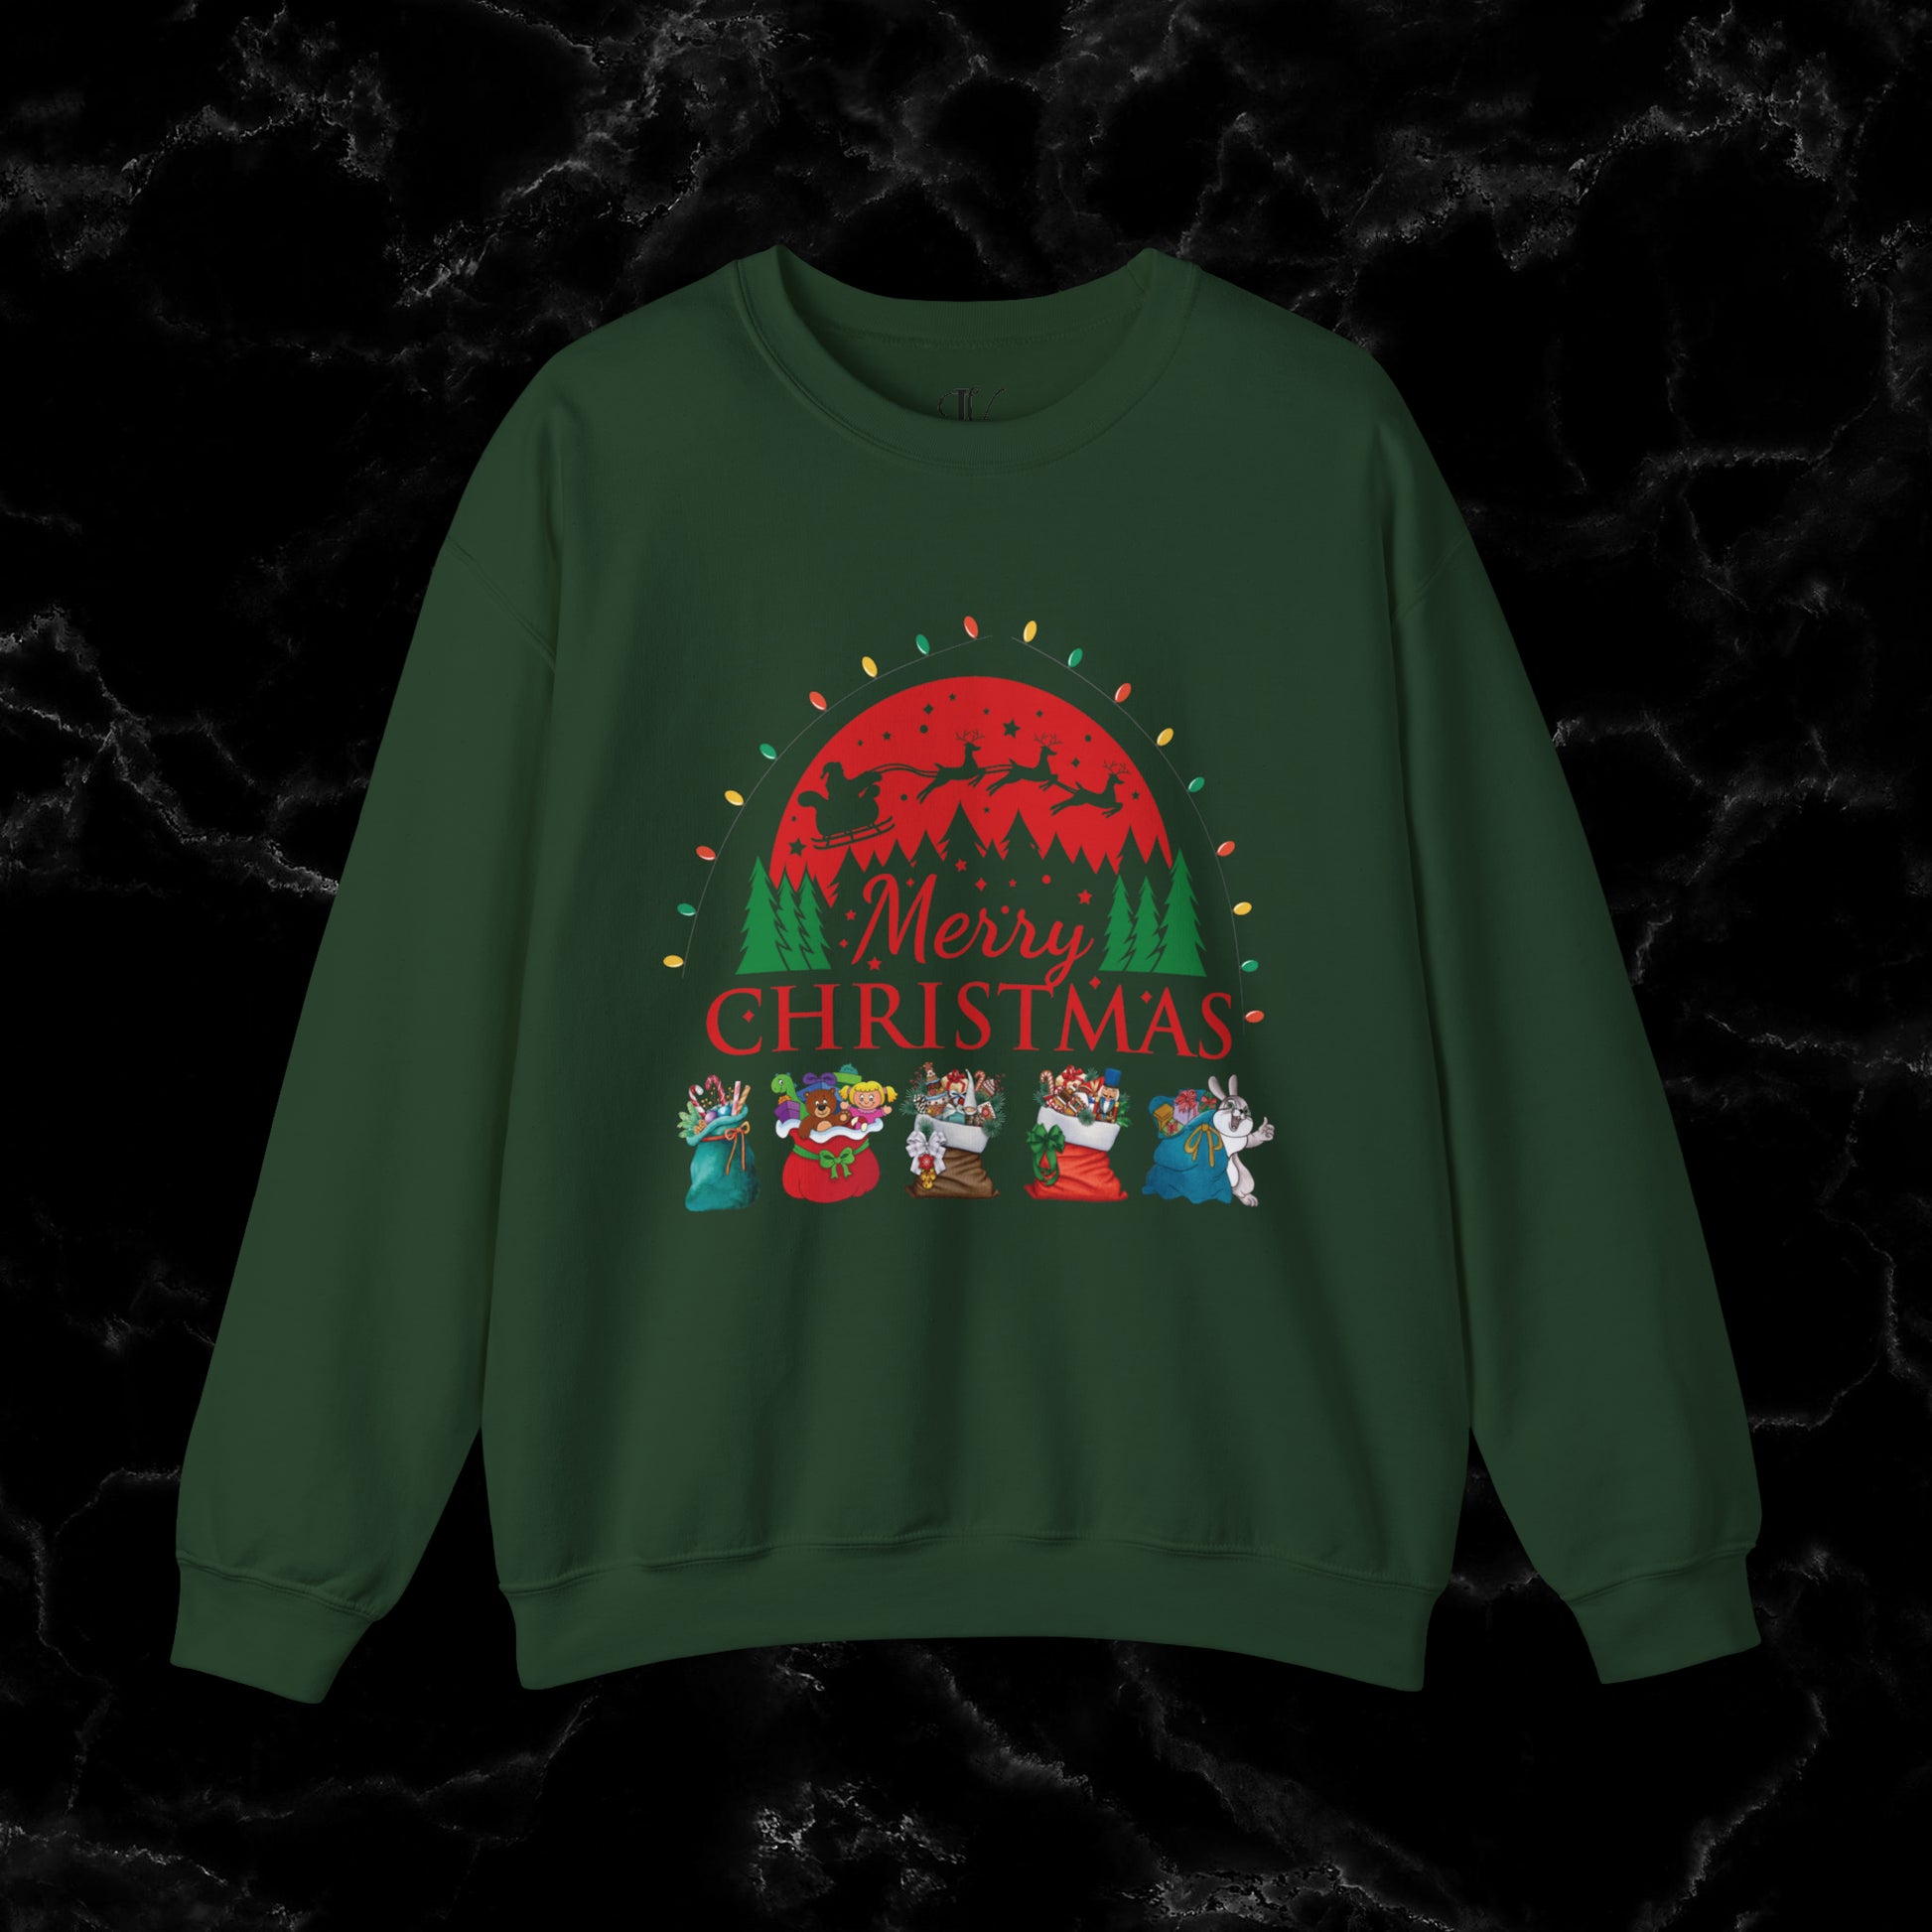 Merry Christmas Sweatshirt - Christmas Shirt with Santa and Festive Theme Sweatshirt S Forest Green 